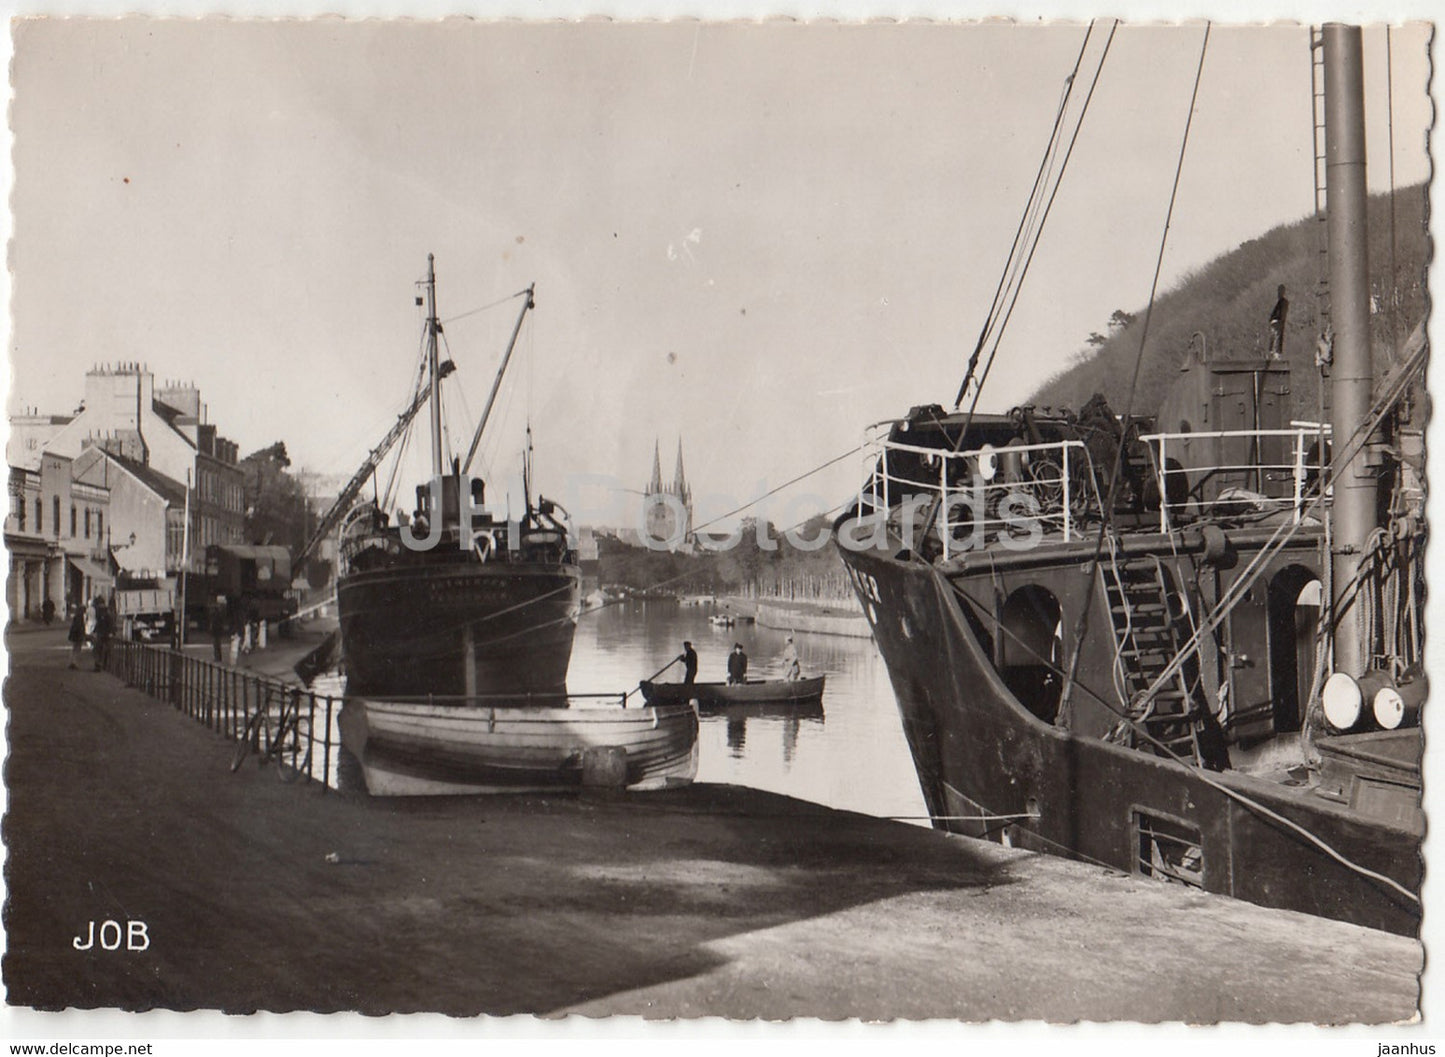 Bretagne - Le Port de Quimper - ship - old postcard - France - unused - JH Postcards